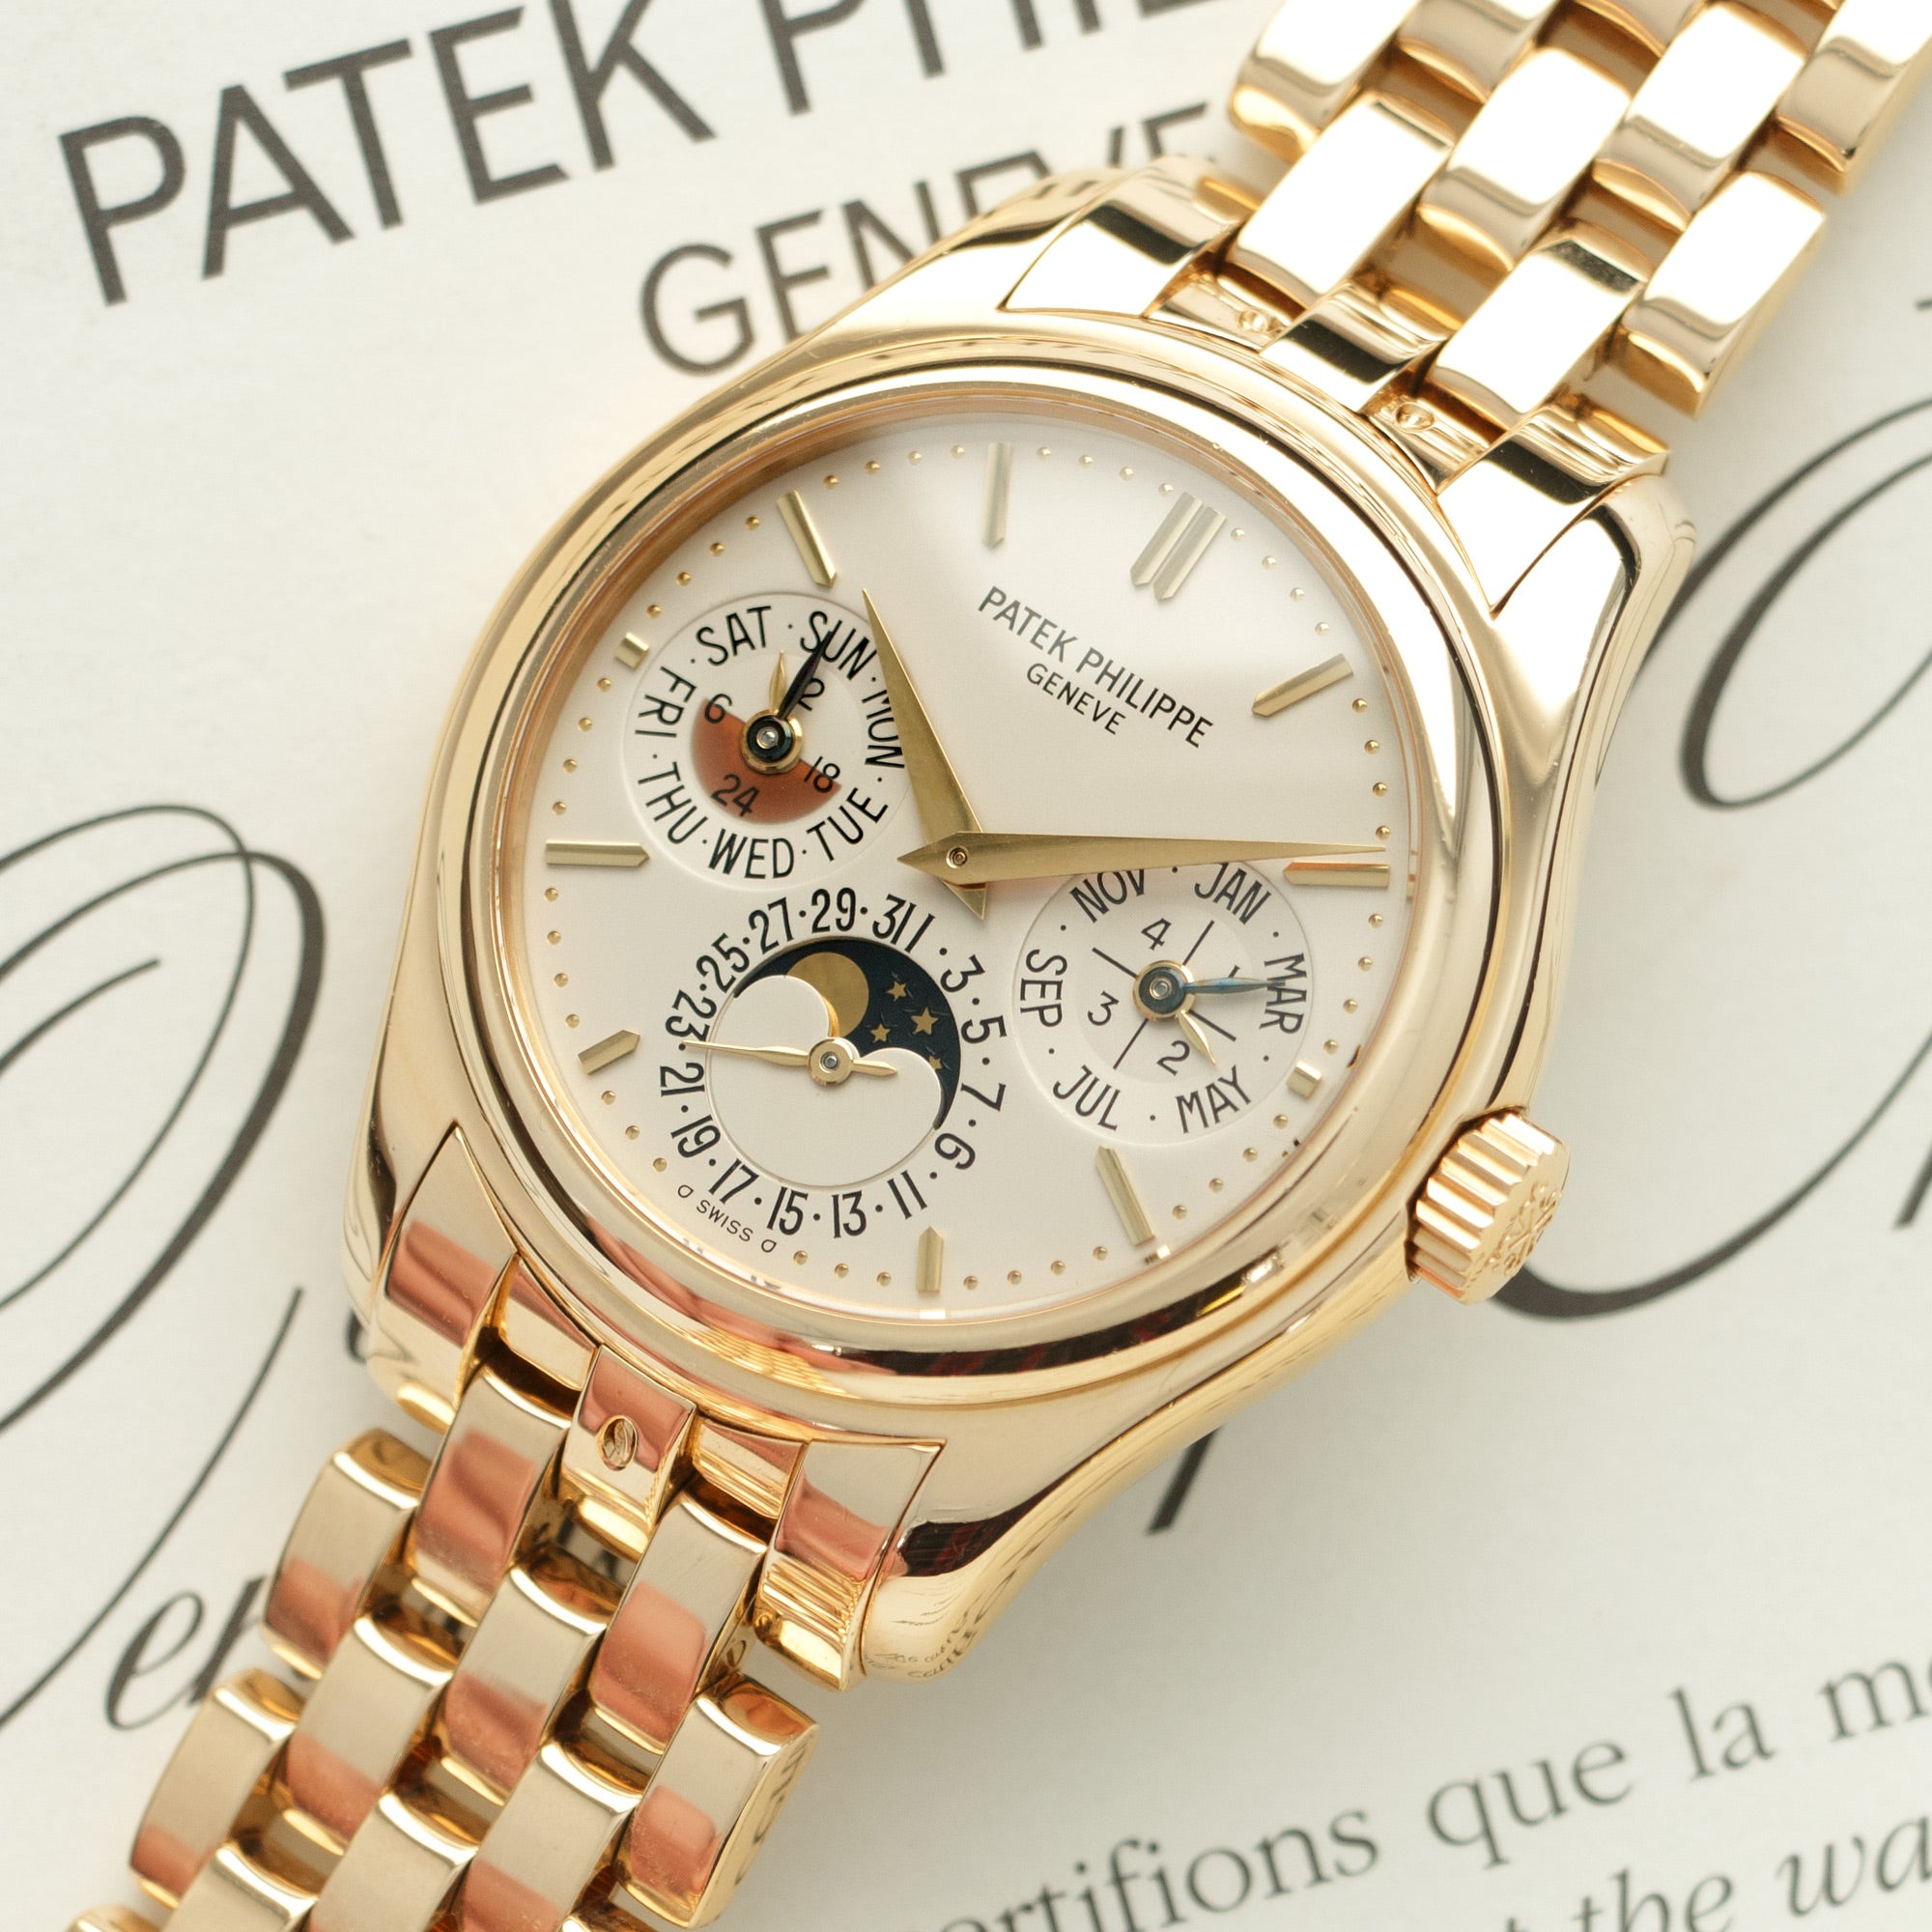 Patek Philippe - Patek Philippe Yellow Gold Perpetual Calendar Watch, Ref. 5136 - The Keystone Watches